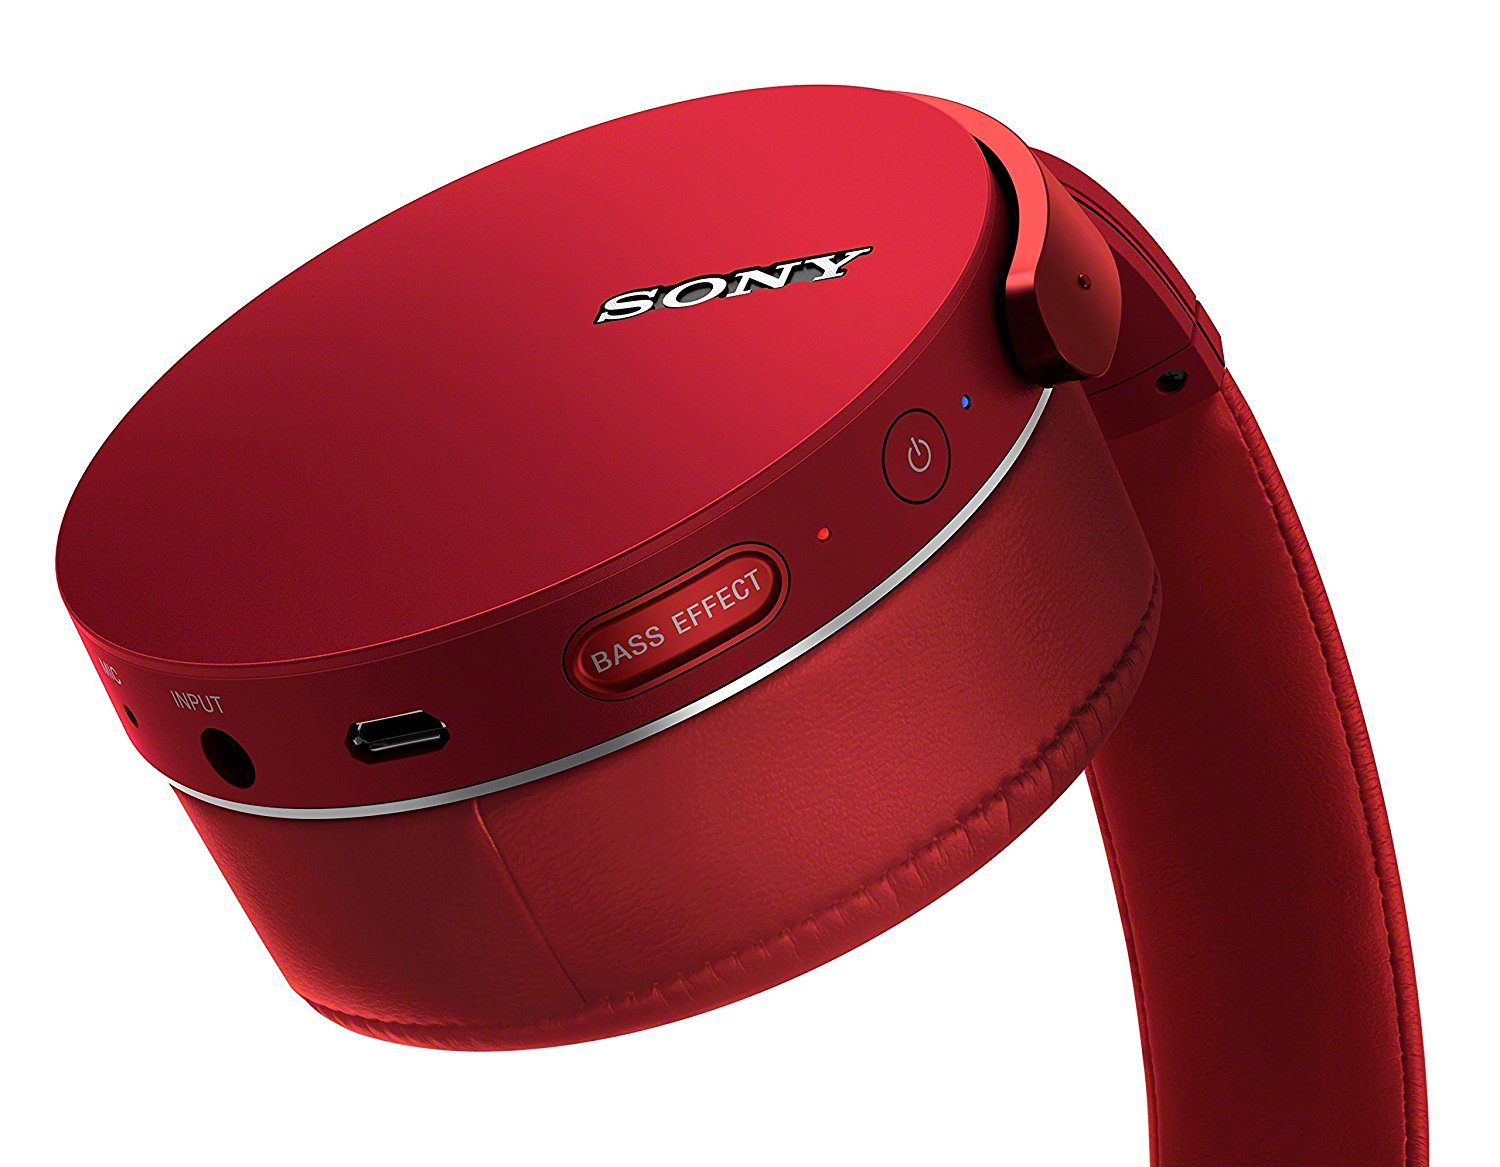 Sony MDR-XB950B1 - Headphones - on-ear - wireless - Bluetooth - red